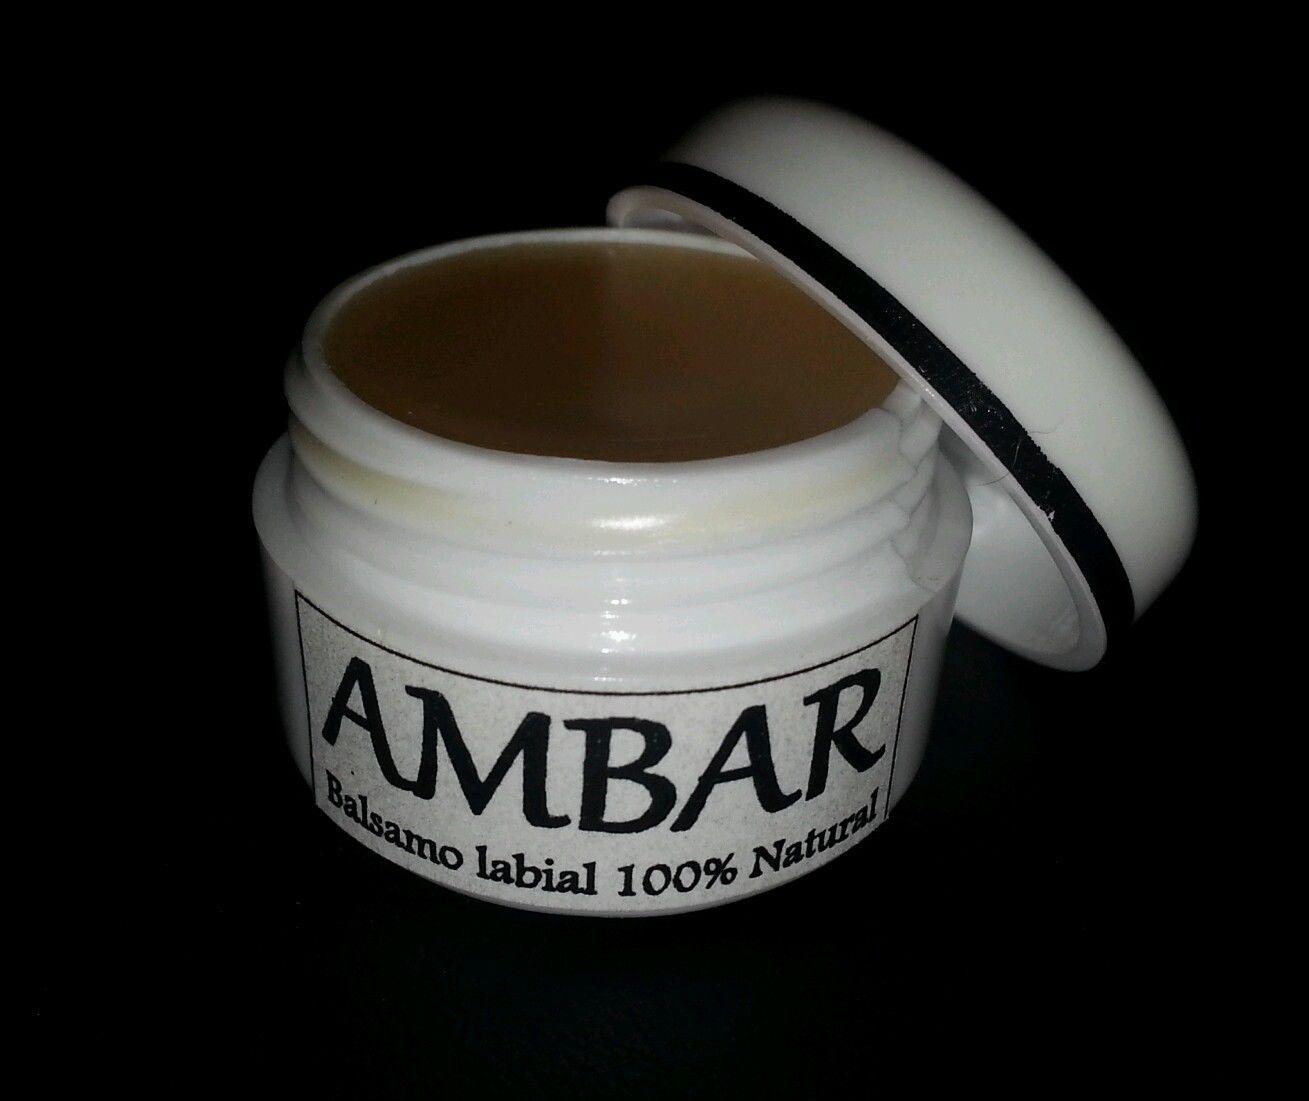    BALSAMO LABIAL AMBAR- 100% NATURAL 5 ml